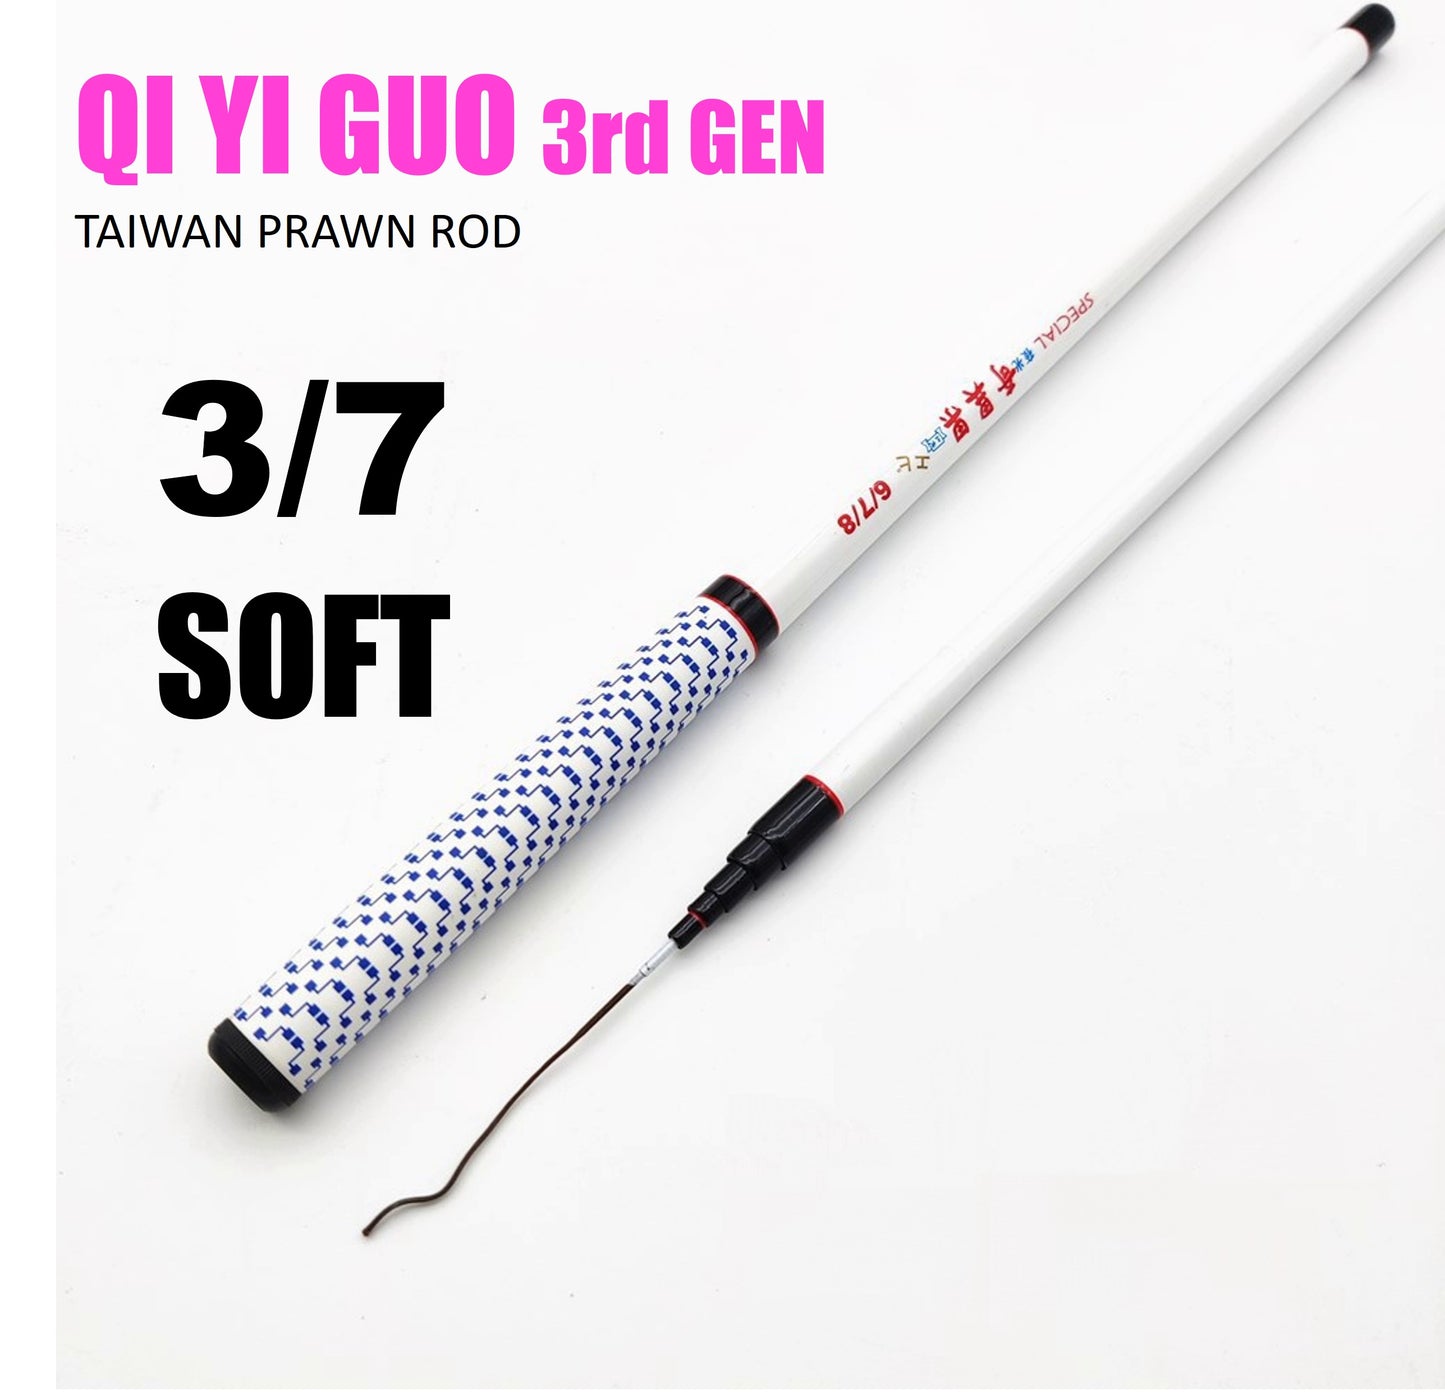 Qi YI Guo 3rd Gen Prawn rod PR031